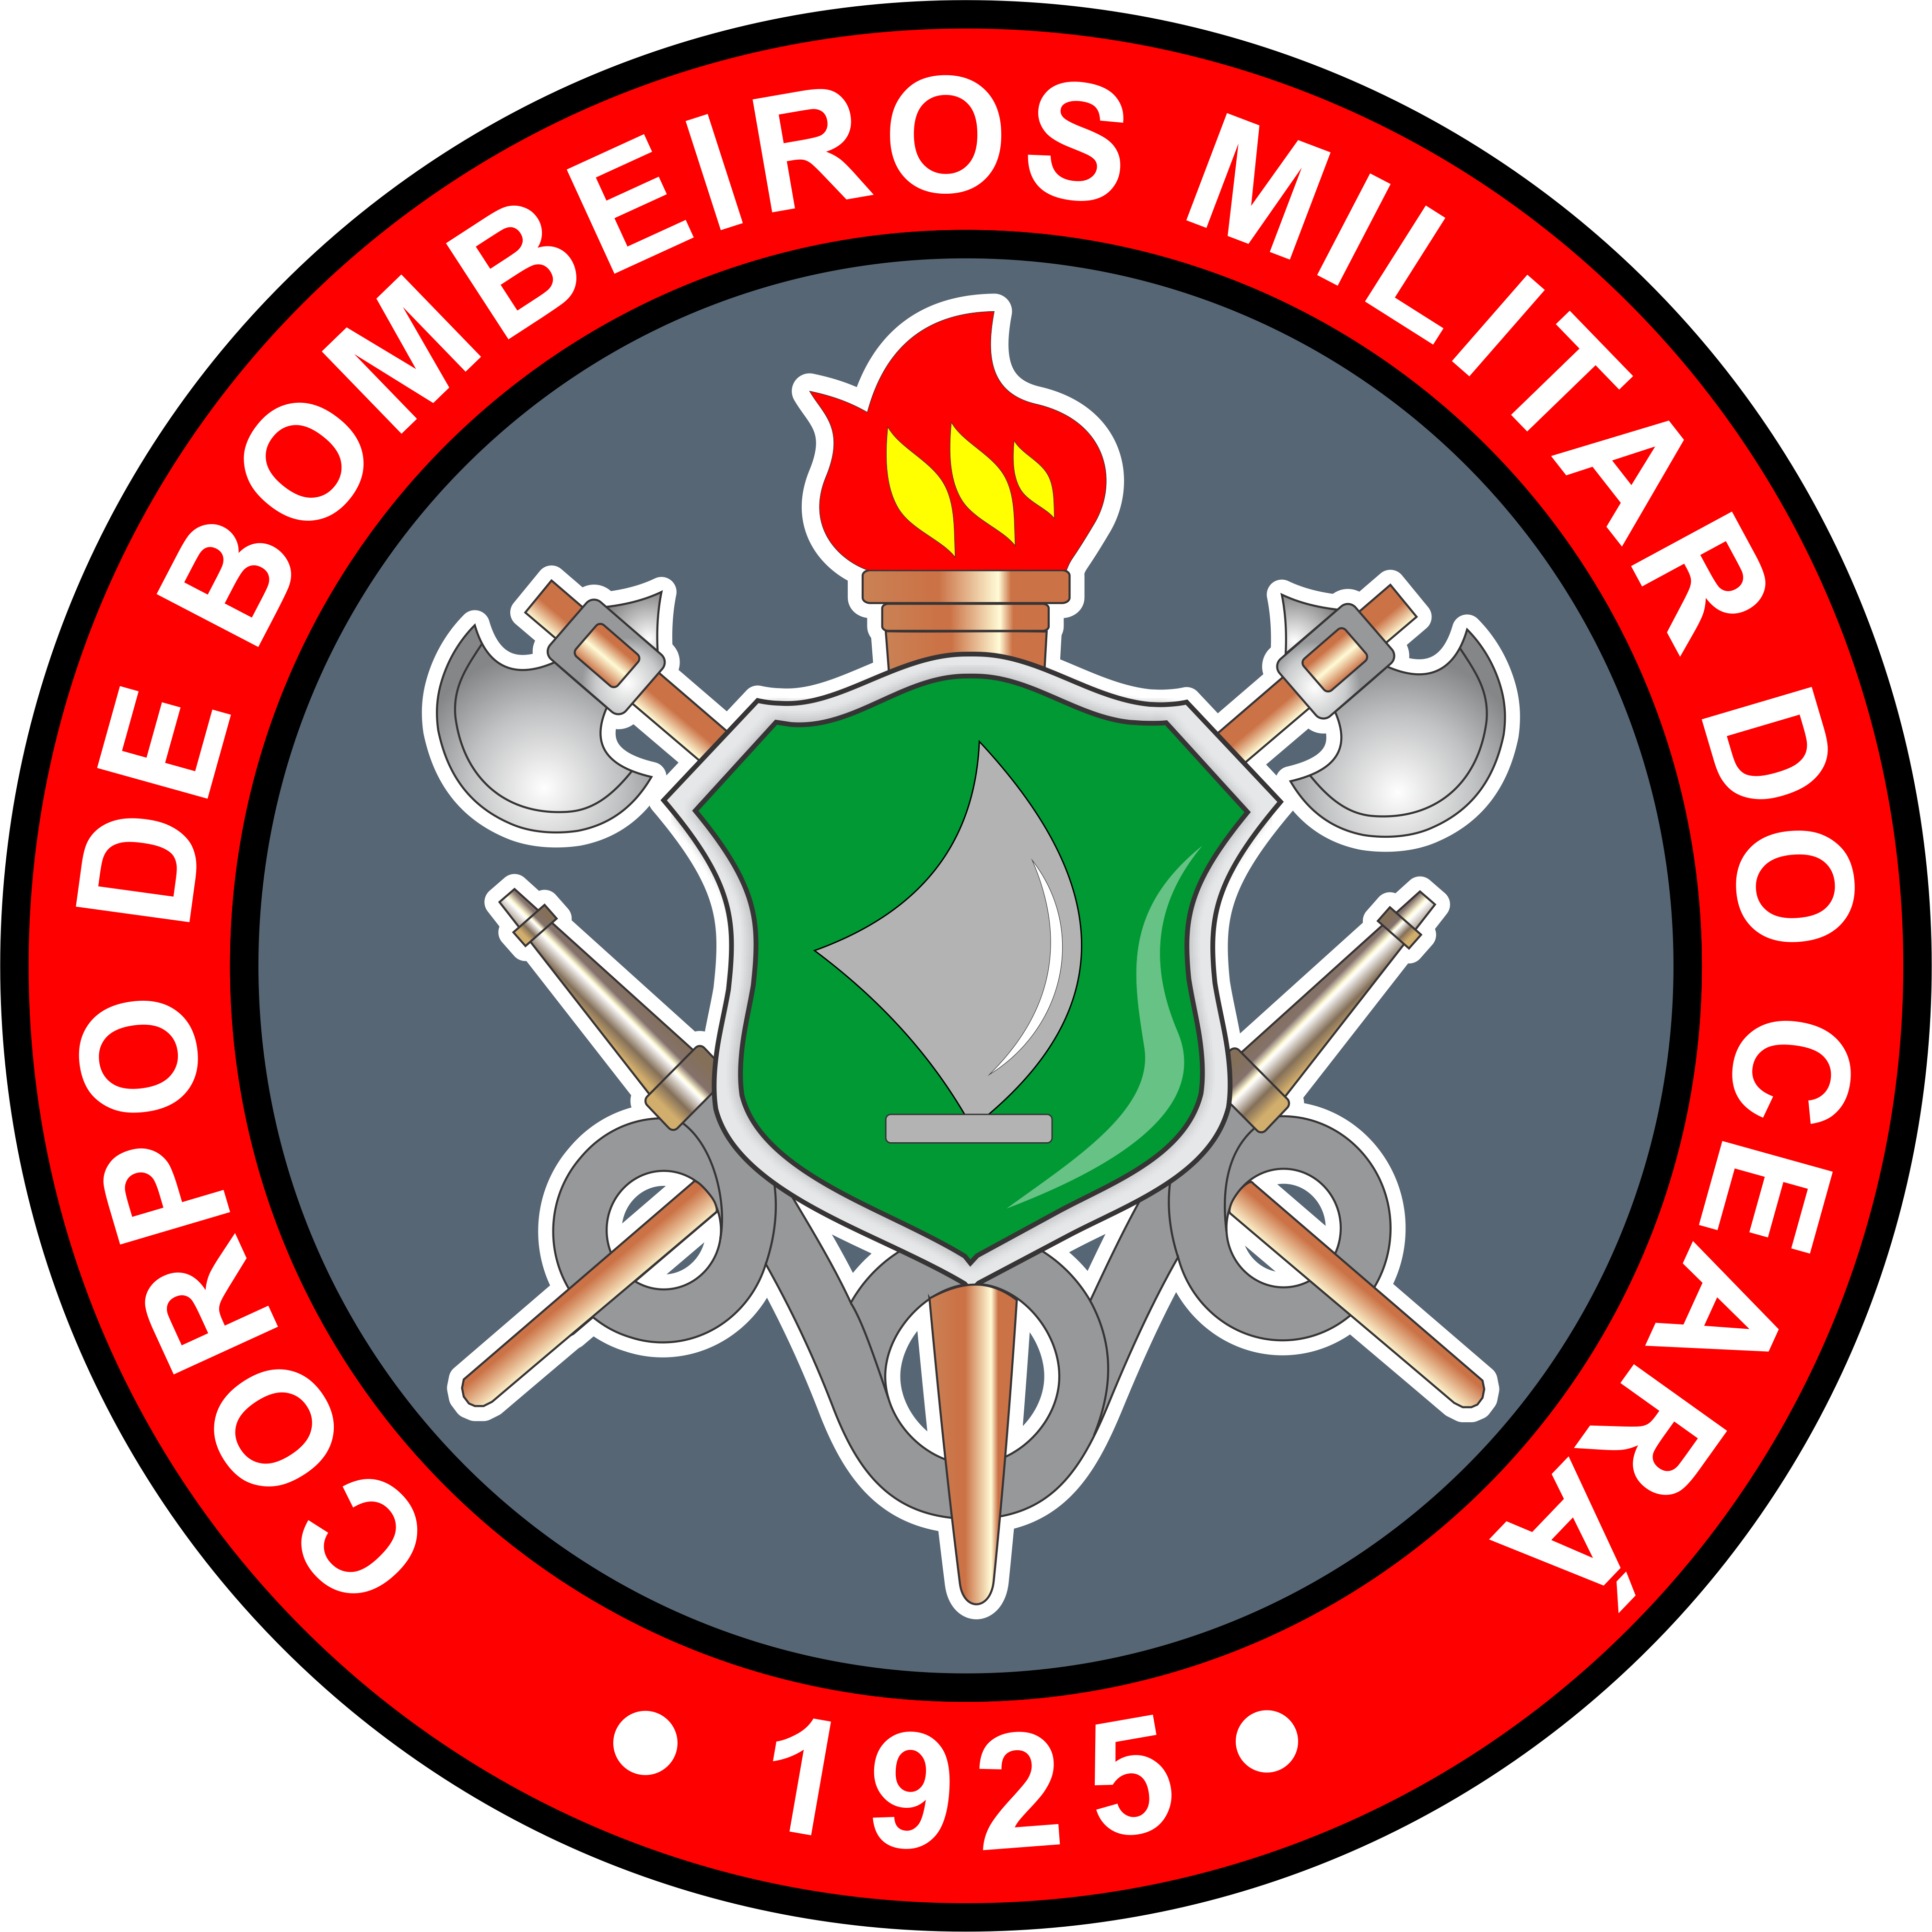 Emblema do Corpo de Bombeiros Militar do Estado do Ceará (CBMCE - 1925)